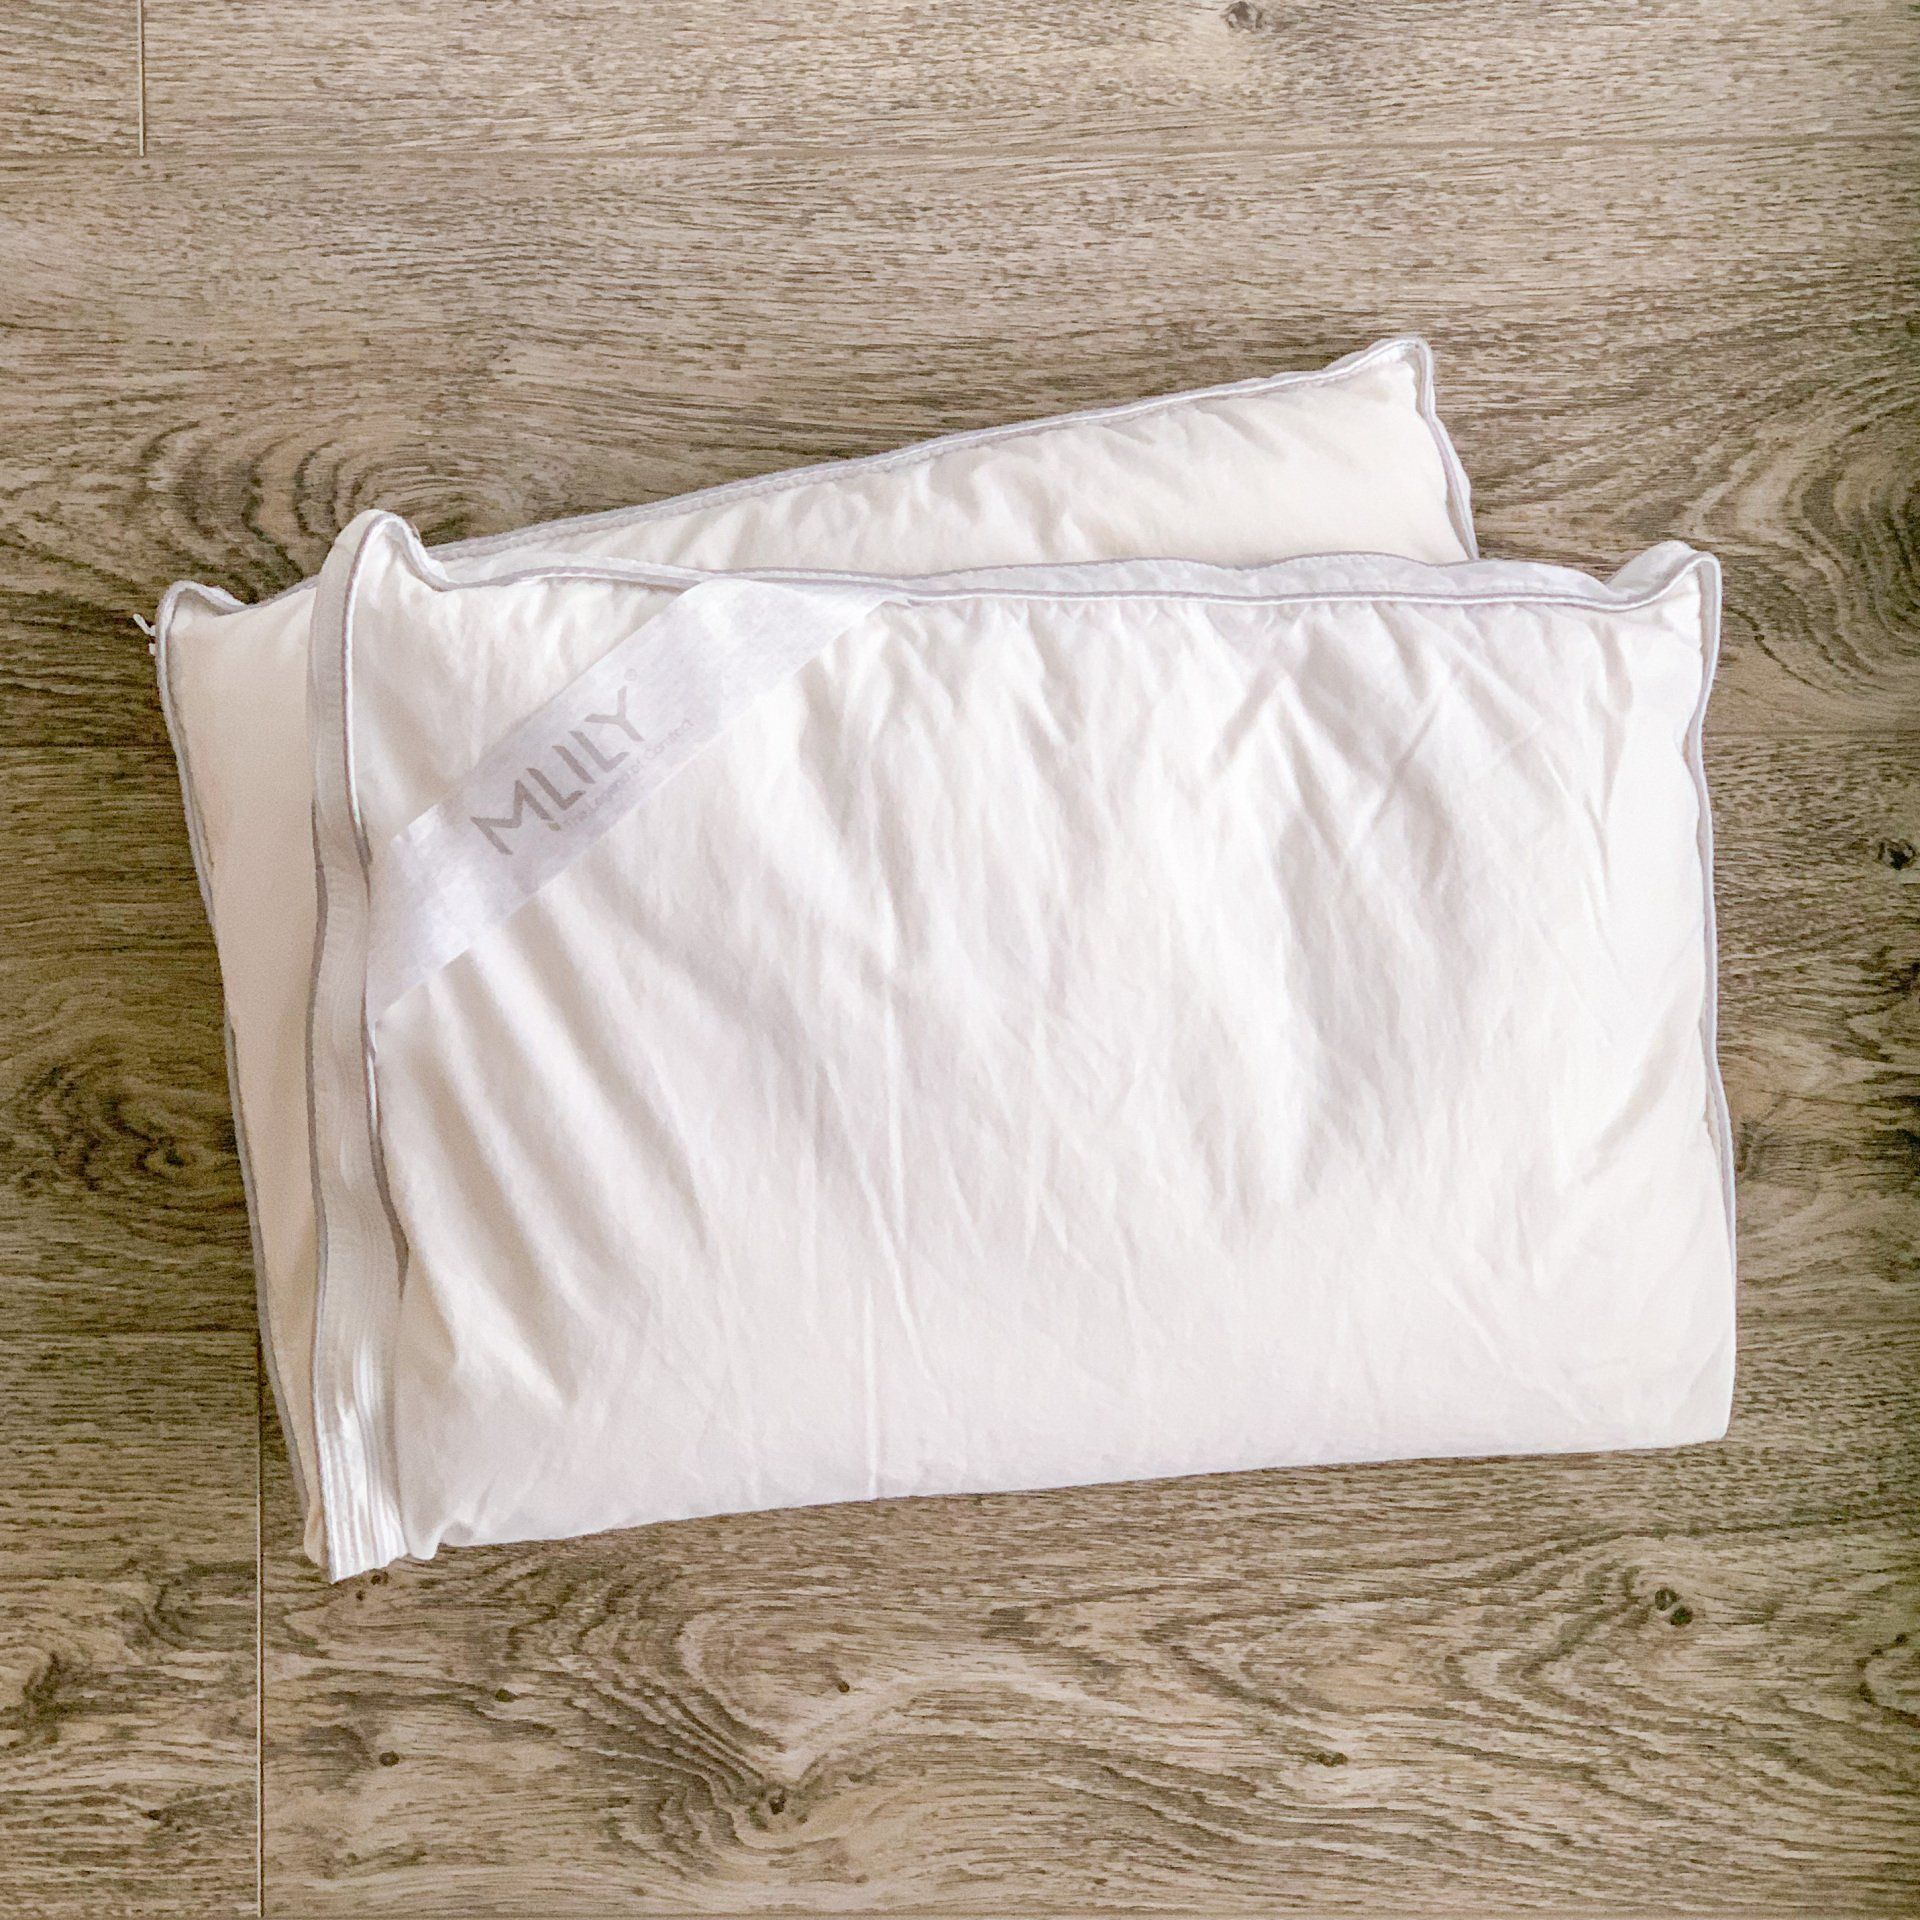 Backcountry pillow